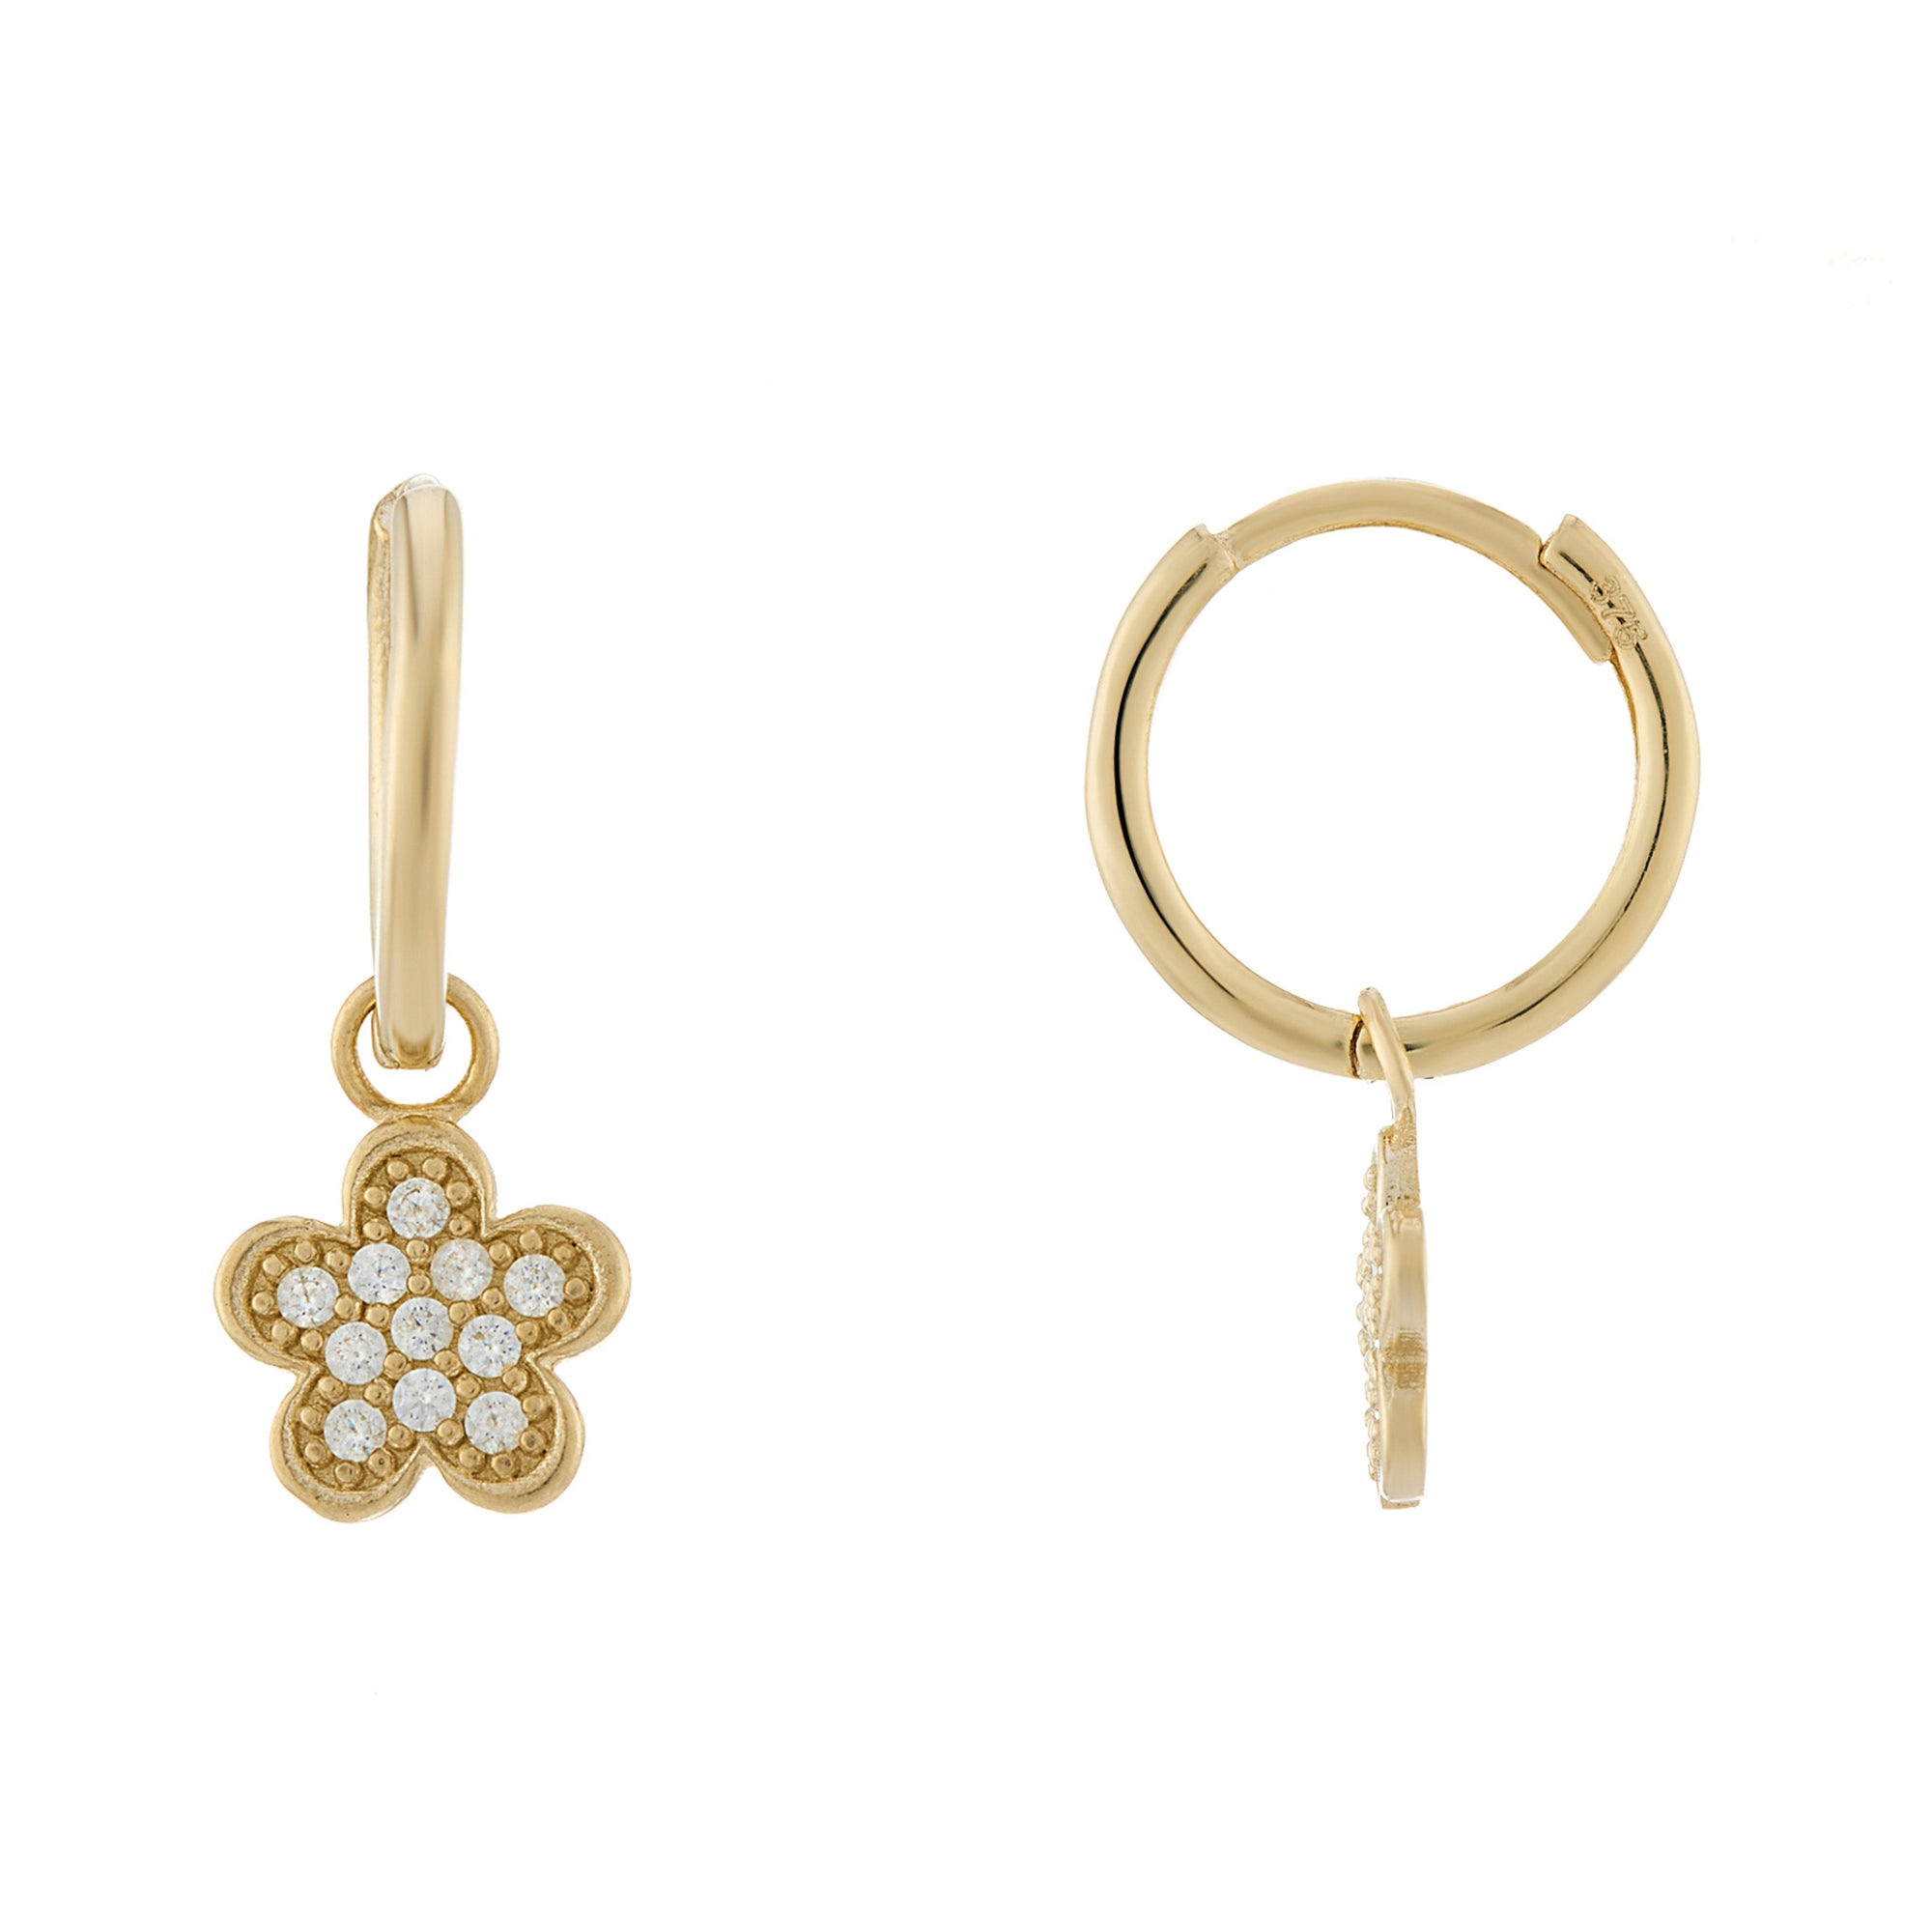 9ct gold hoop earrings with cz flower drop